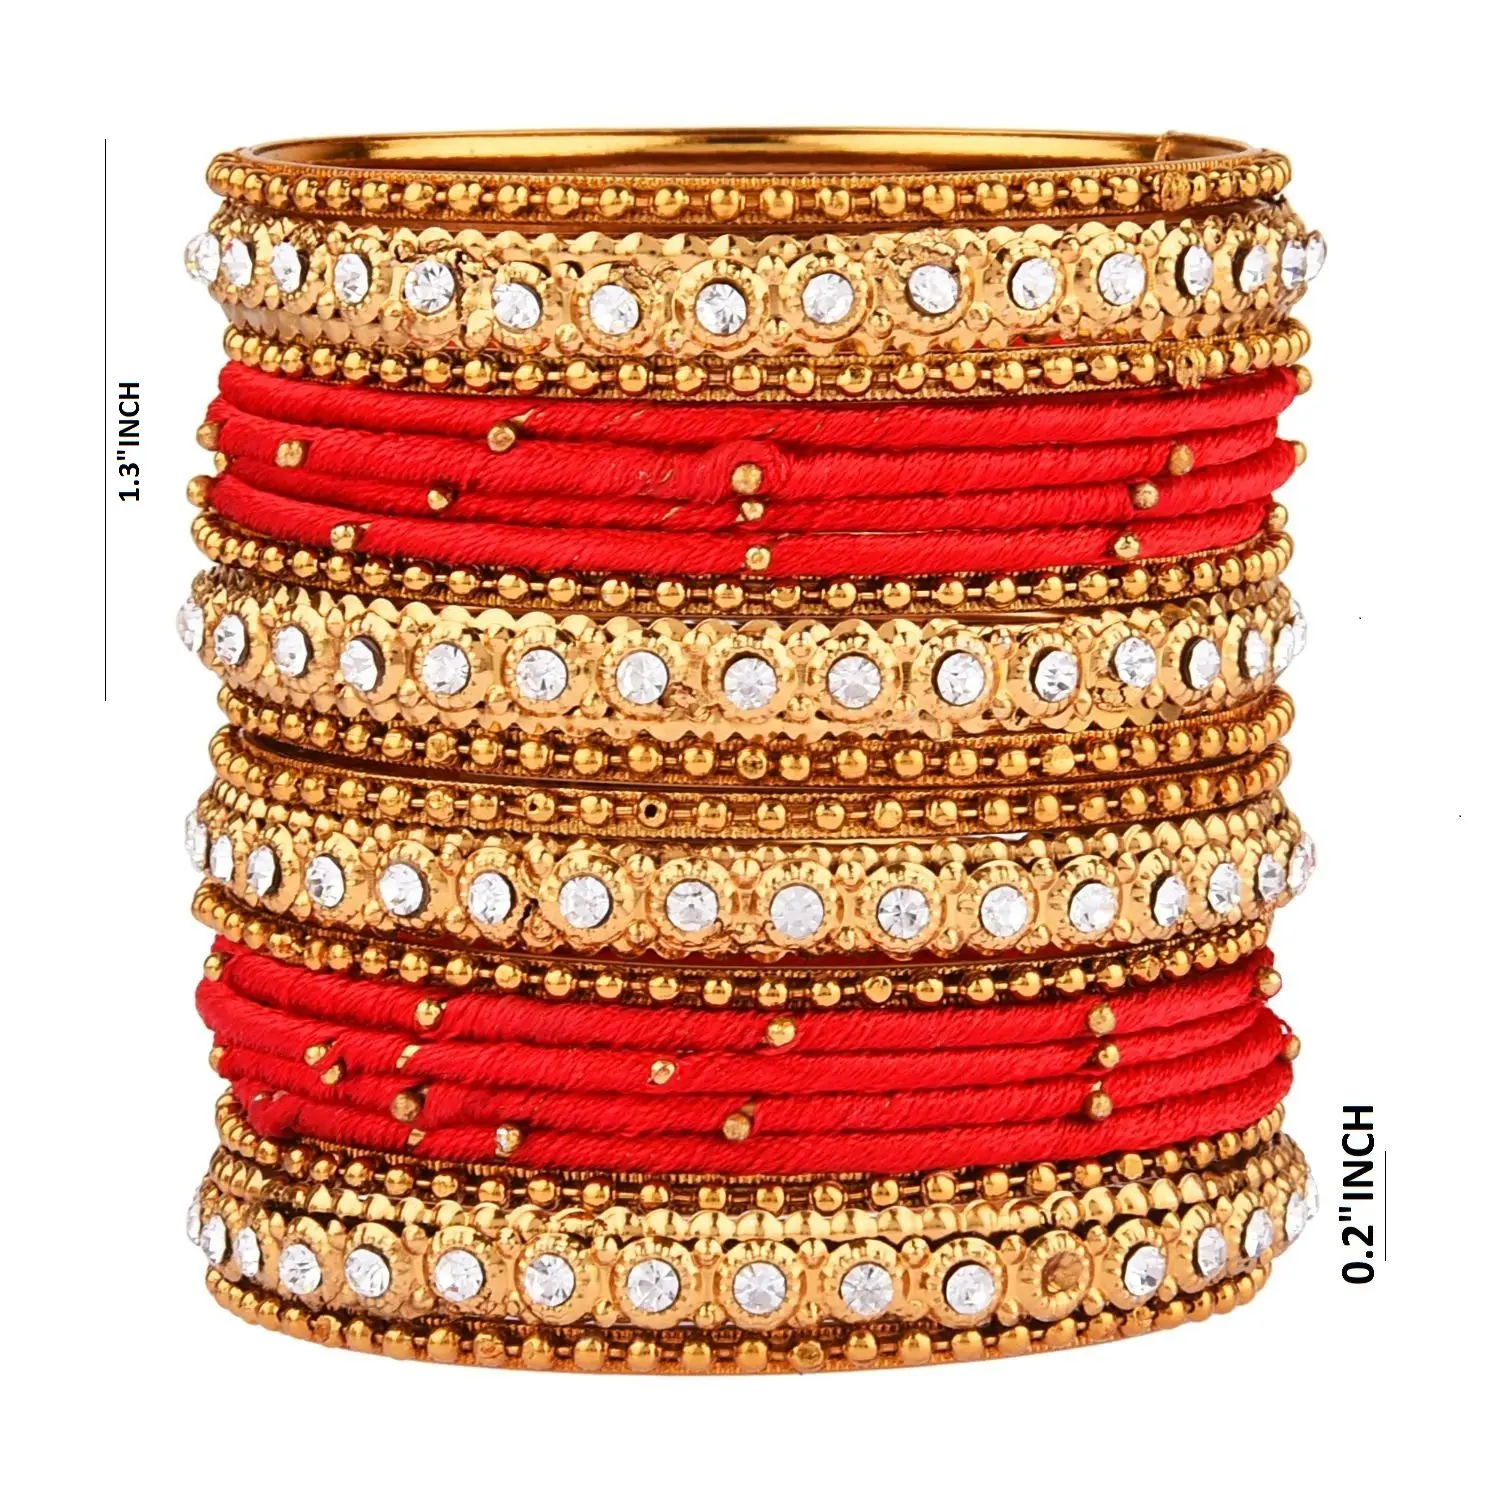 भारतीय बॉलीवुड फैशन आभूषण सोना मढ़वाया क्रिस्टल मनके लाल रंग रेशम धागा कंगन चूड़ी सेट (20 पीसी)